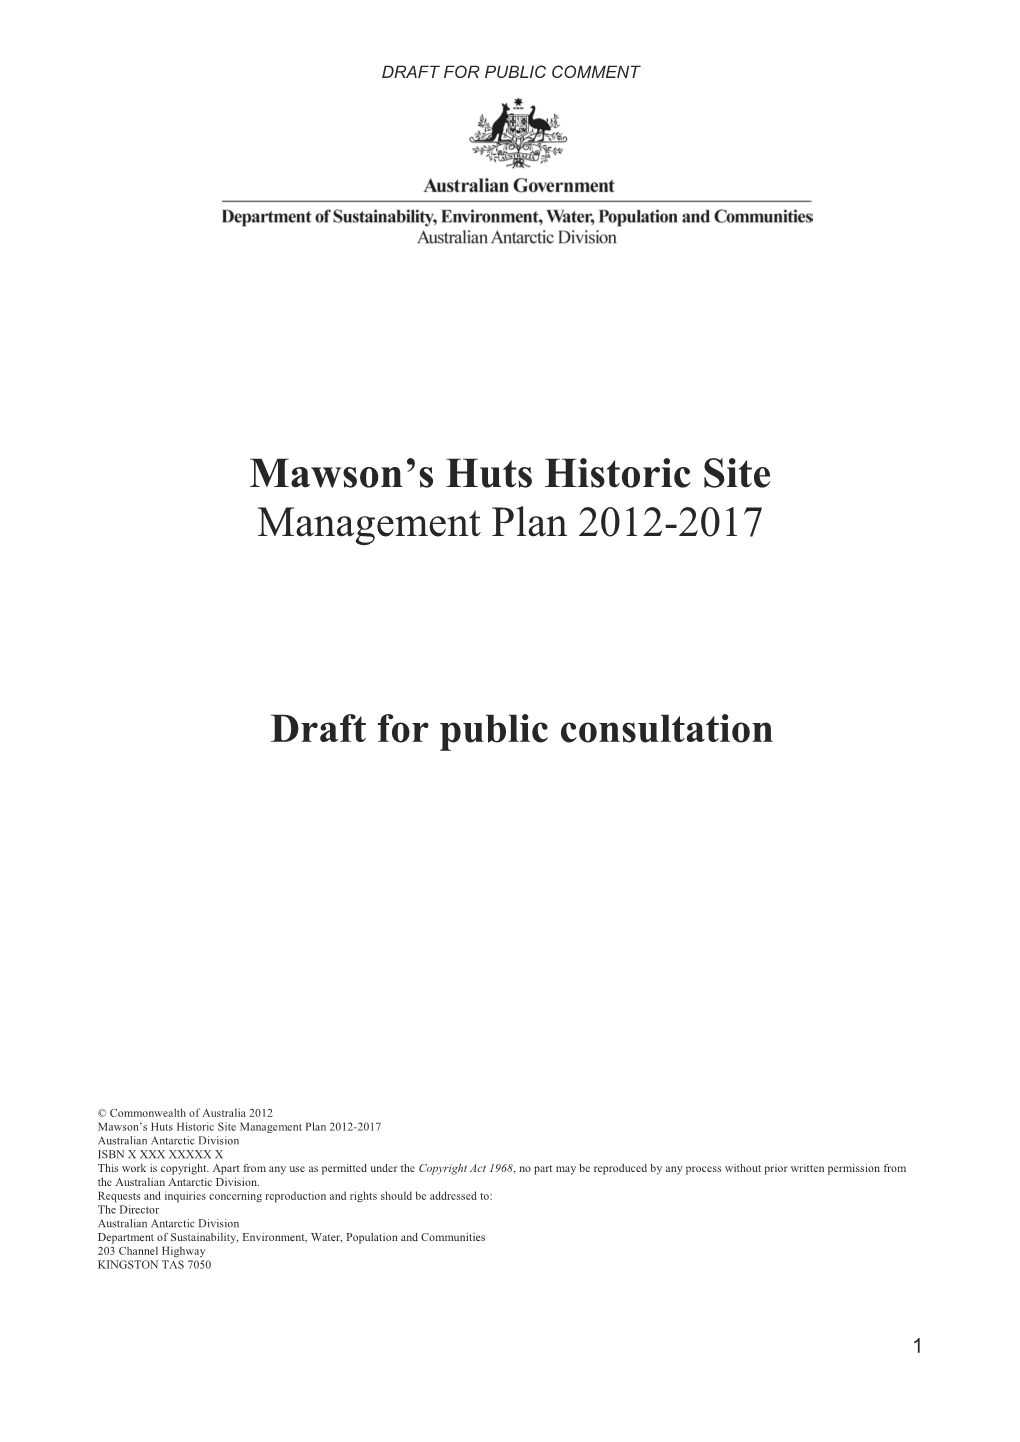 Mawson's Huts Historic Site Management Plan 2012-2017